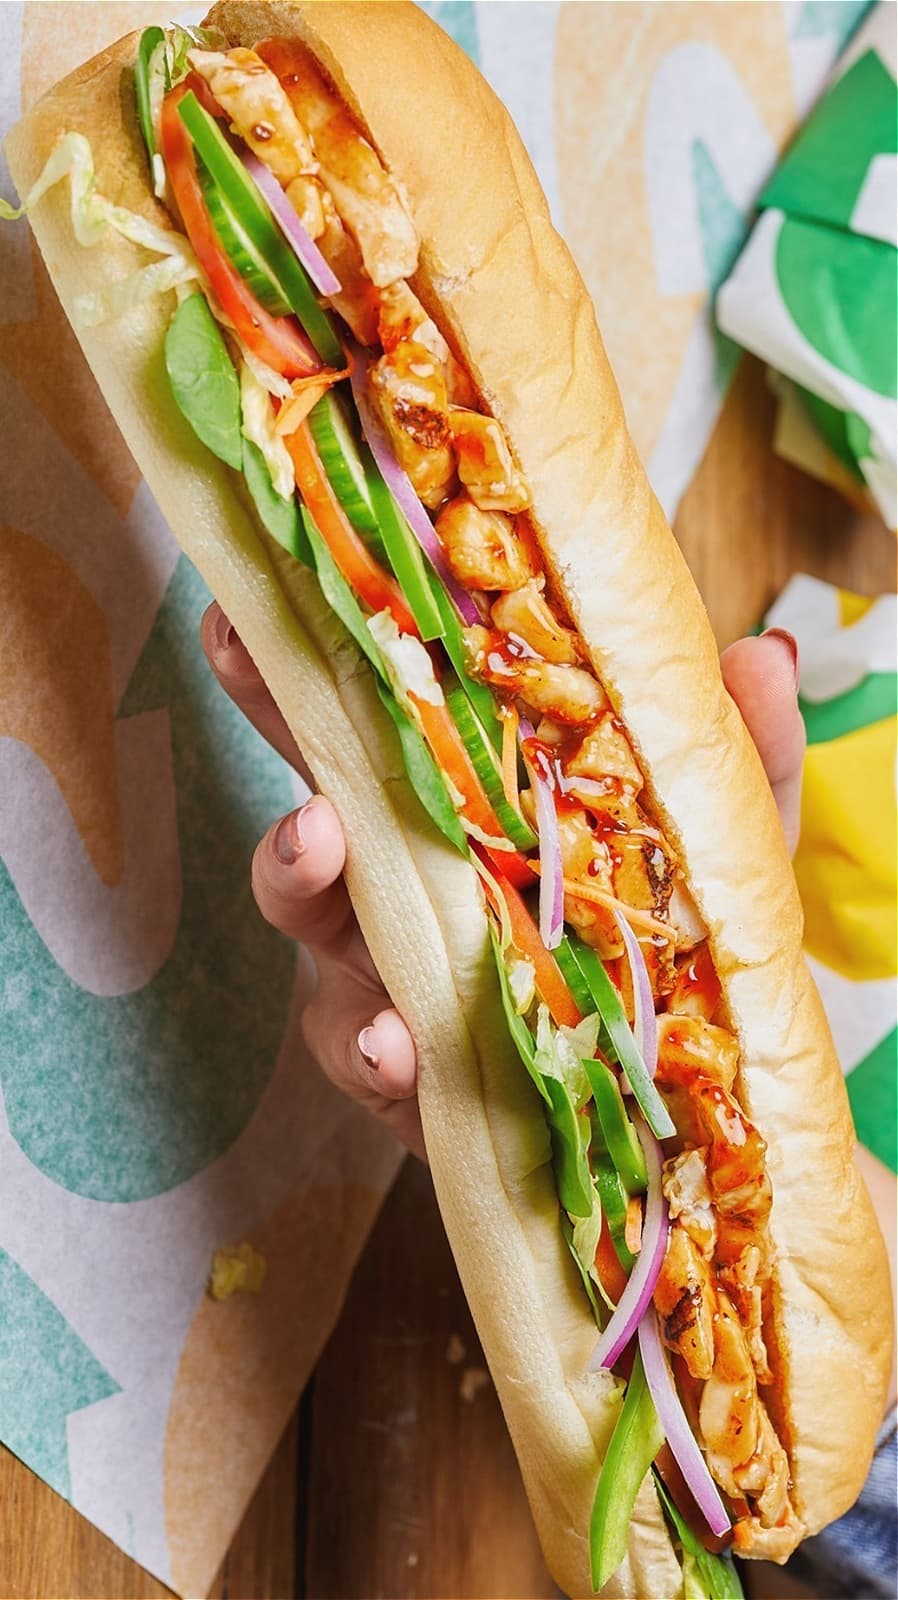 Hand holding a Subway sandwich